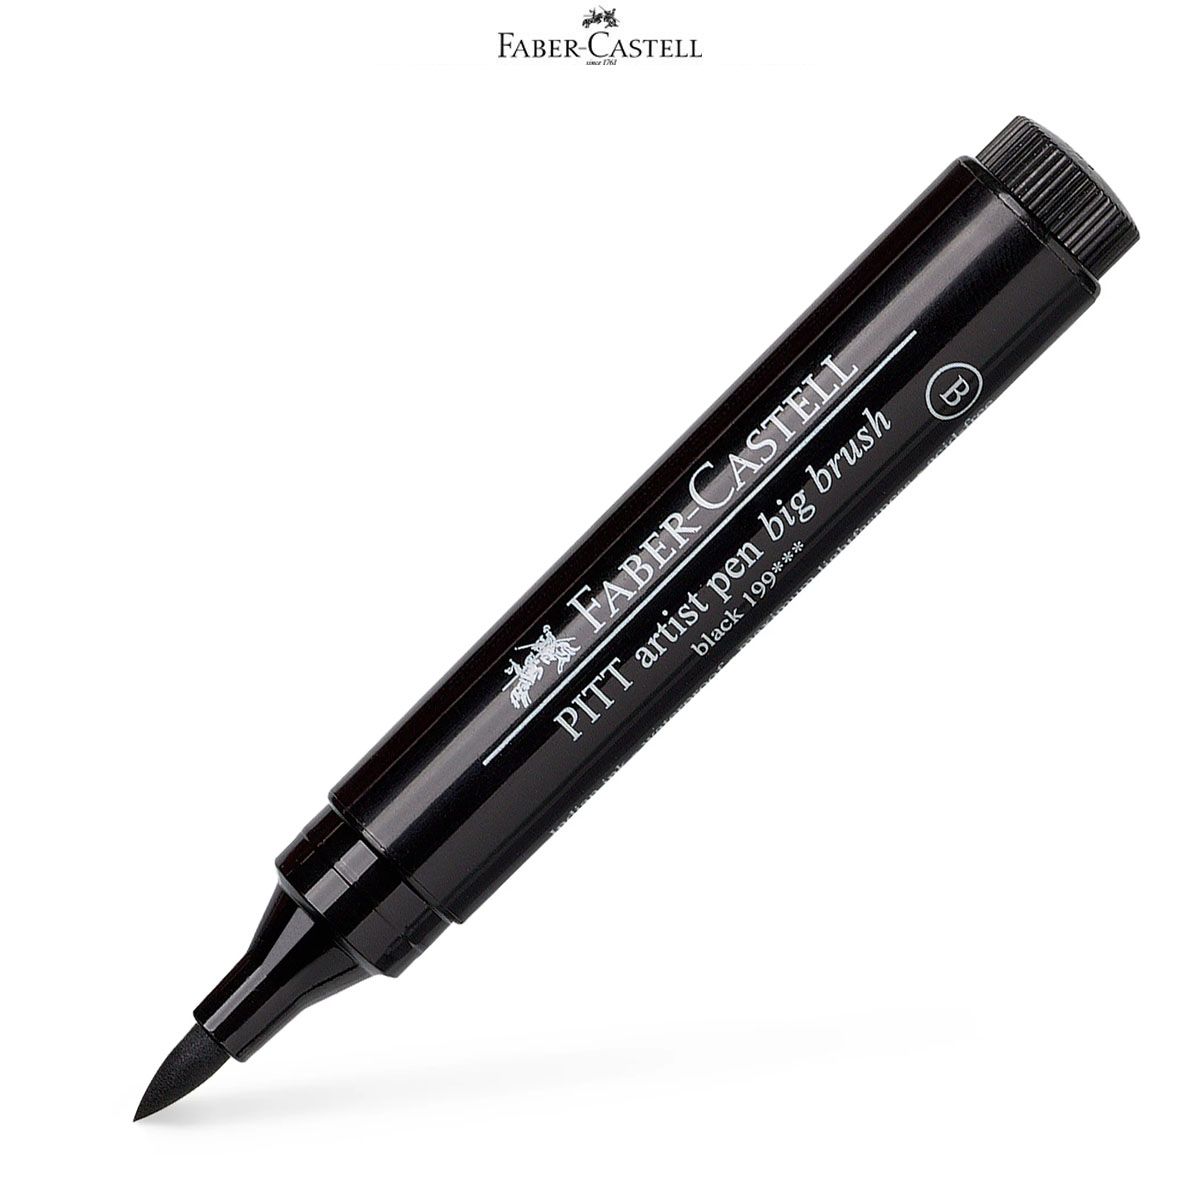 https://www.jerrysartarama.com/media/catalog/product/cache/ecb49a32eeb5603594b082bd5fe65733/b/l/black-faber-castell-pitt-big-brush-pens.jpg